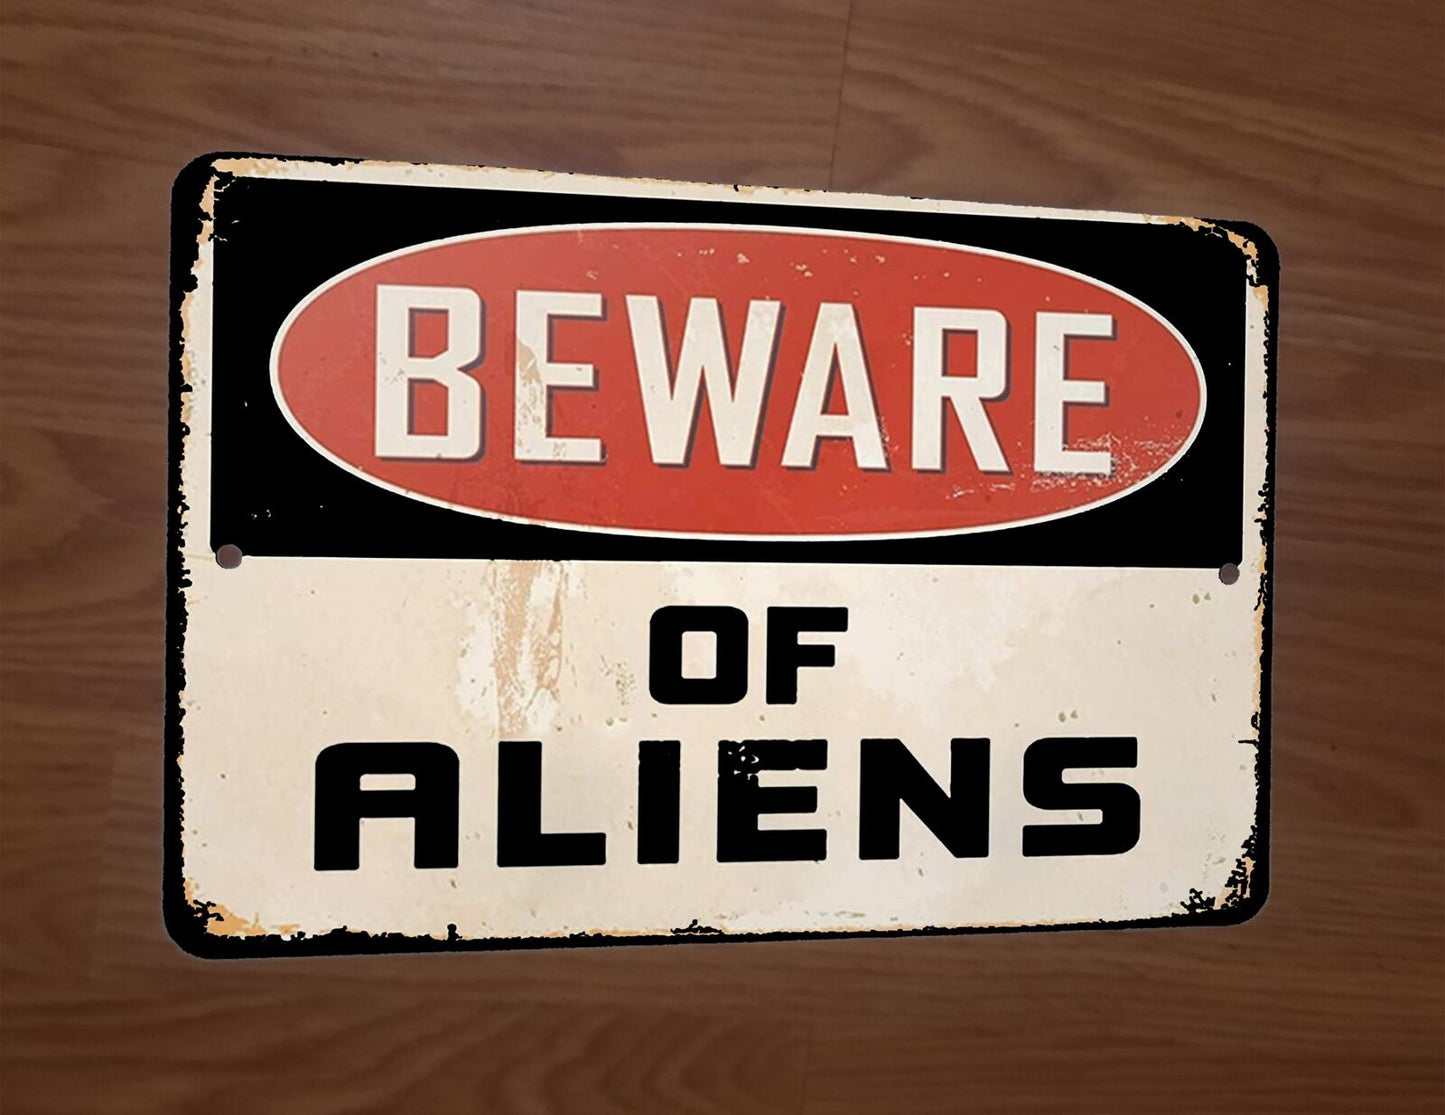 Beware of Aliens Top Secret Military 8x12 Metal Wall Sign